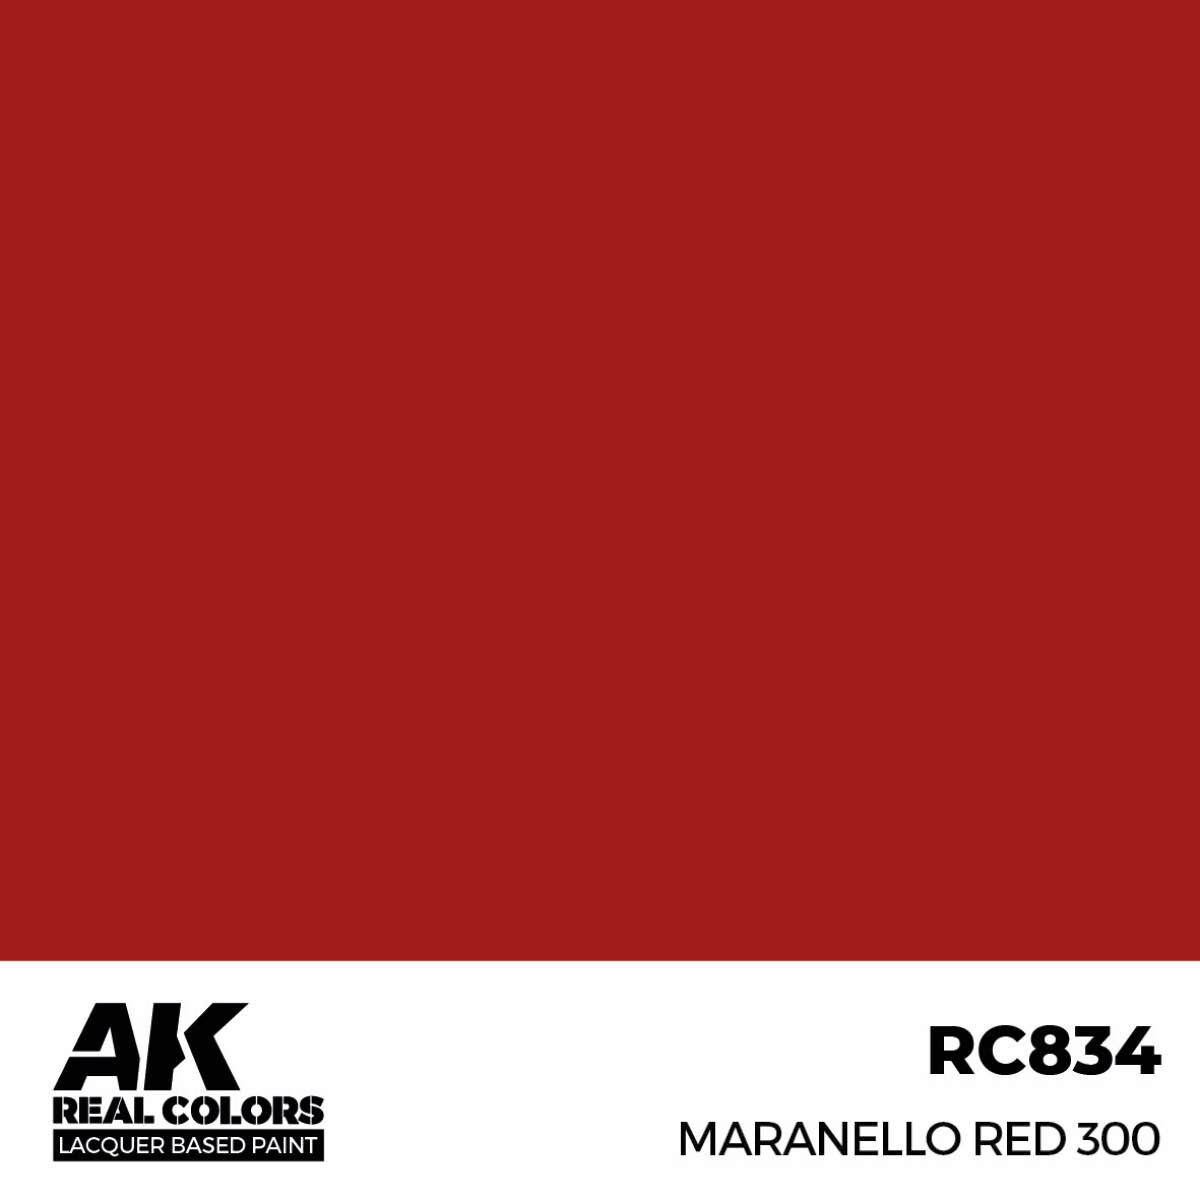 AK RC834 Real Colors Maranello Red 300 17 ml.